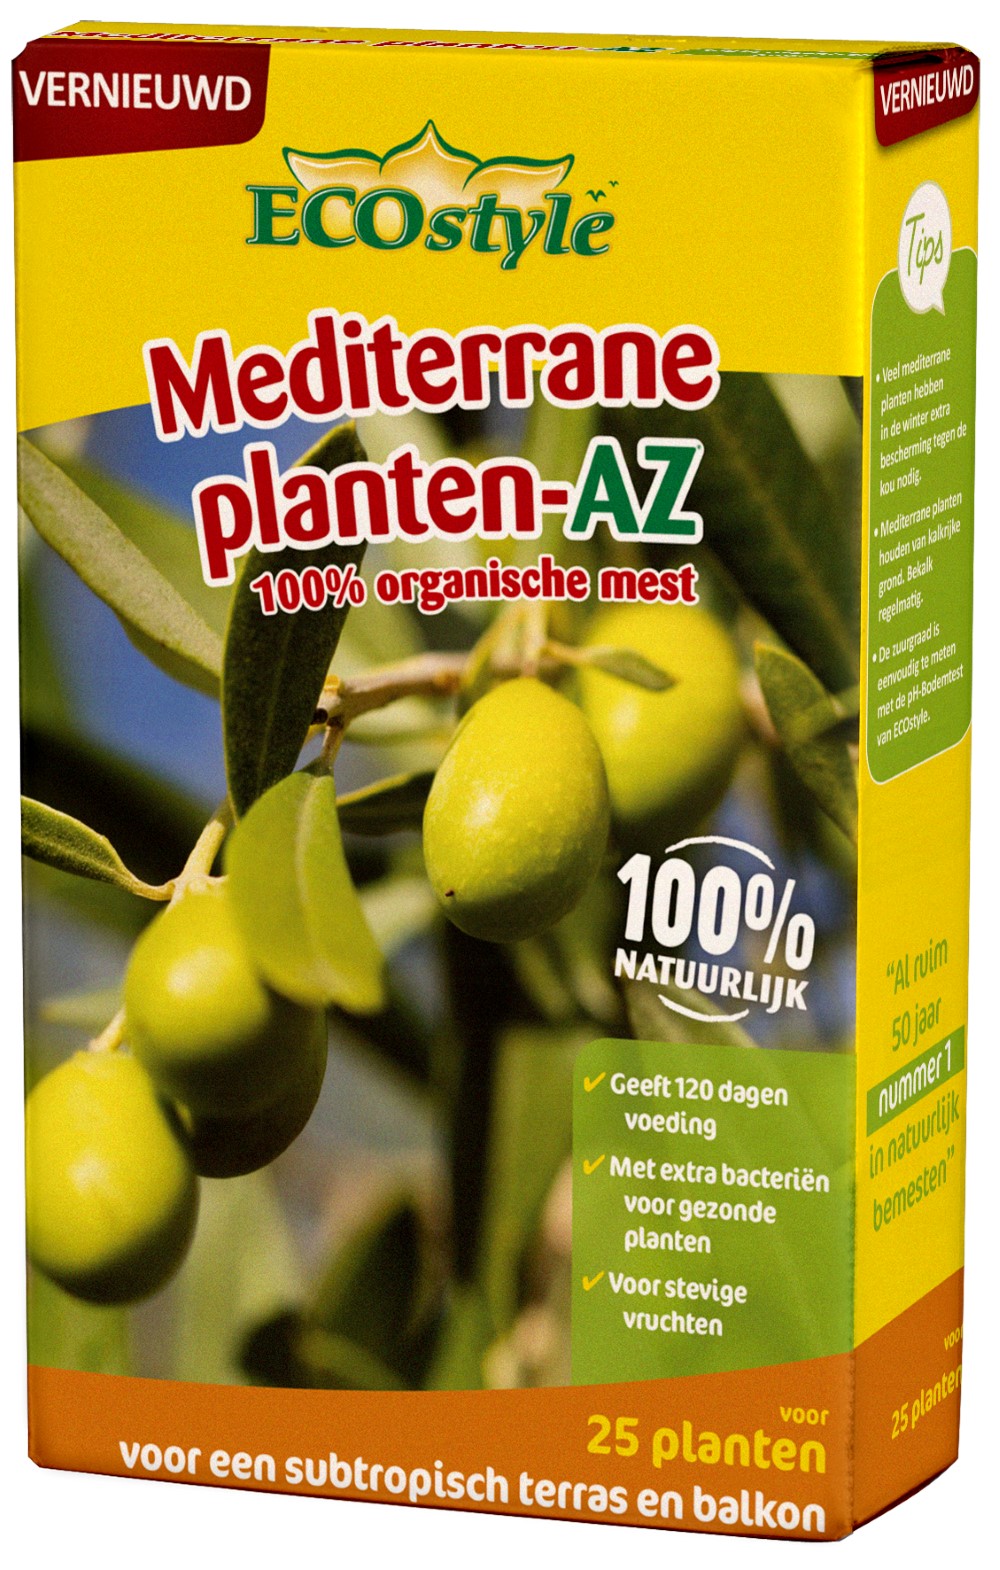 Afbeelding Ecostyle Mediterrane planten-AZ 800 g door Haxo.nl